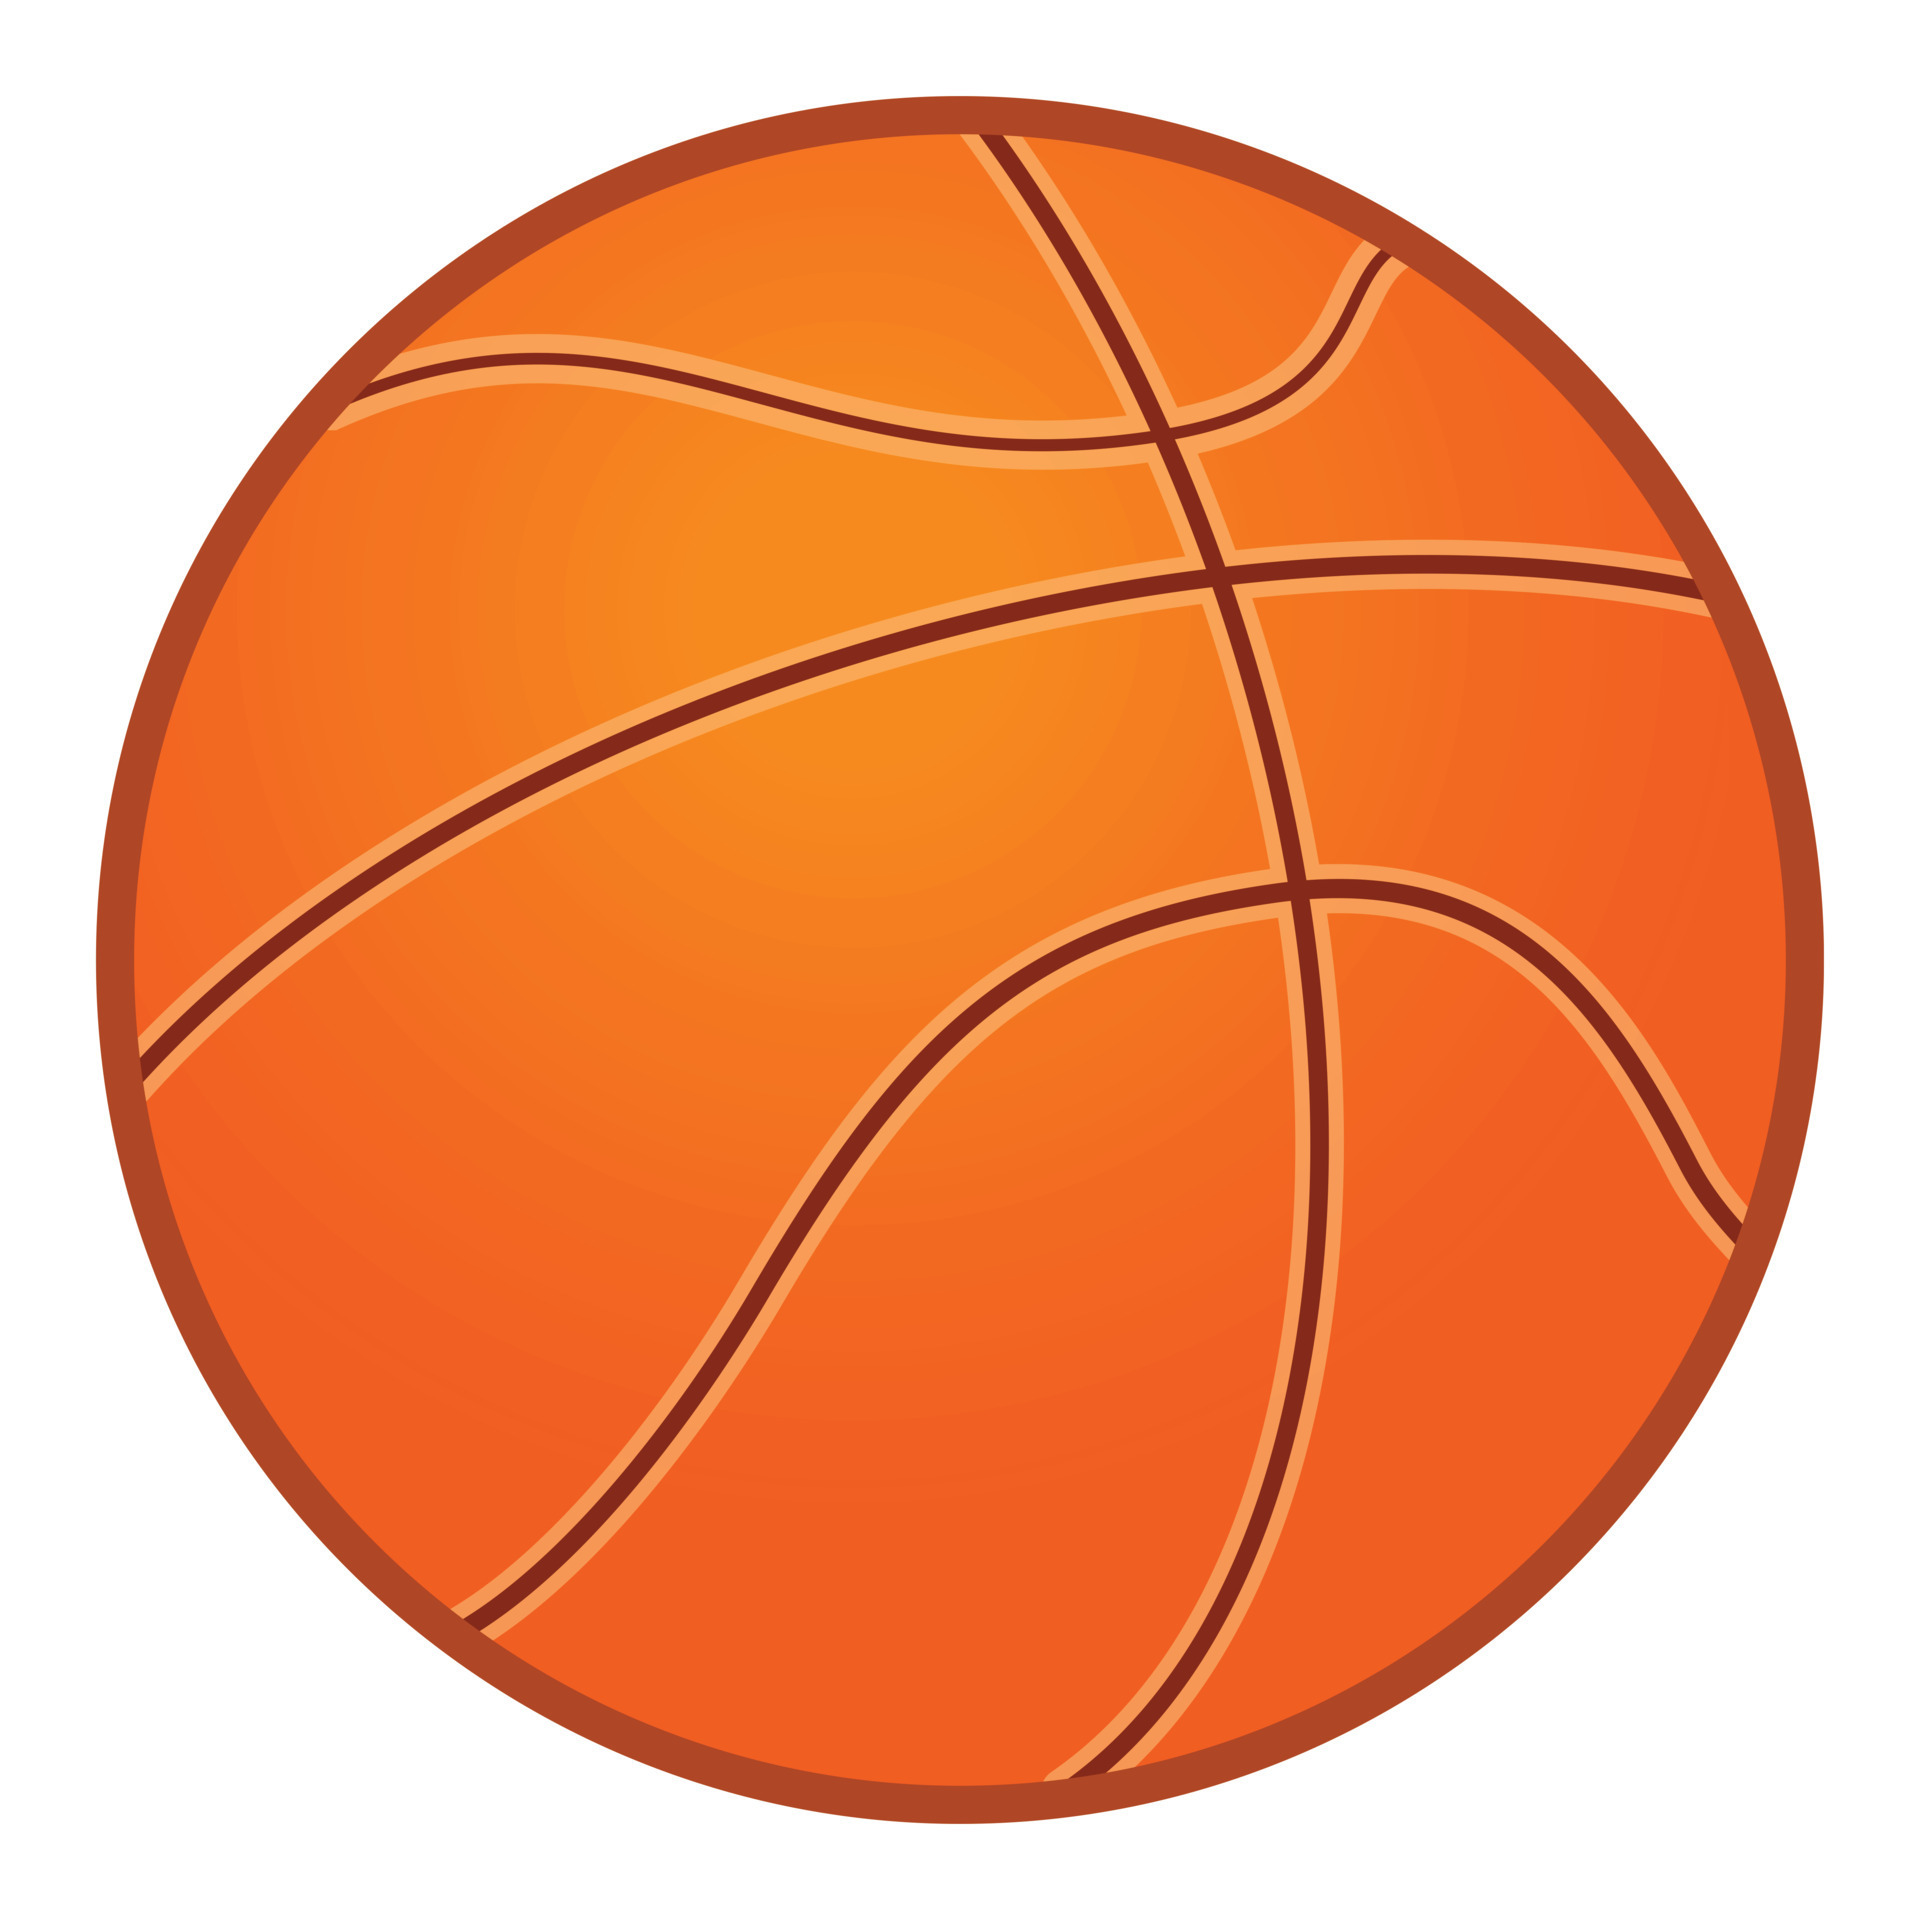 icono de pelota de baloncesto, estilo de dibujos animados 14186417 Vector  en Vecteezy